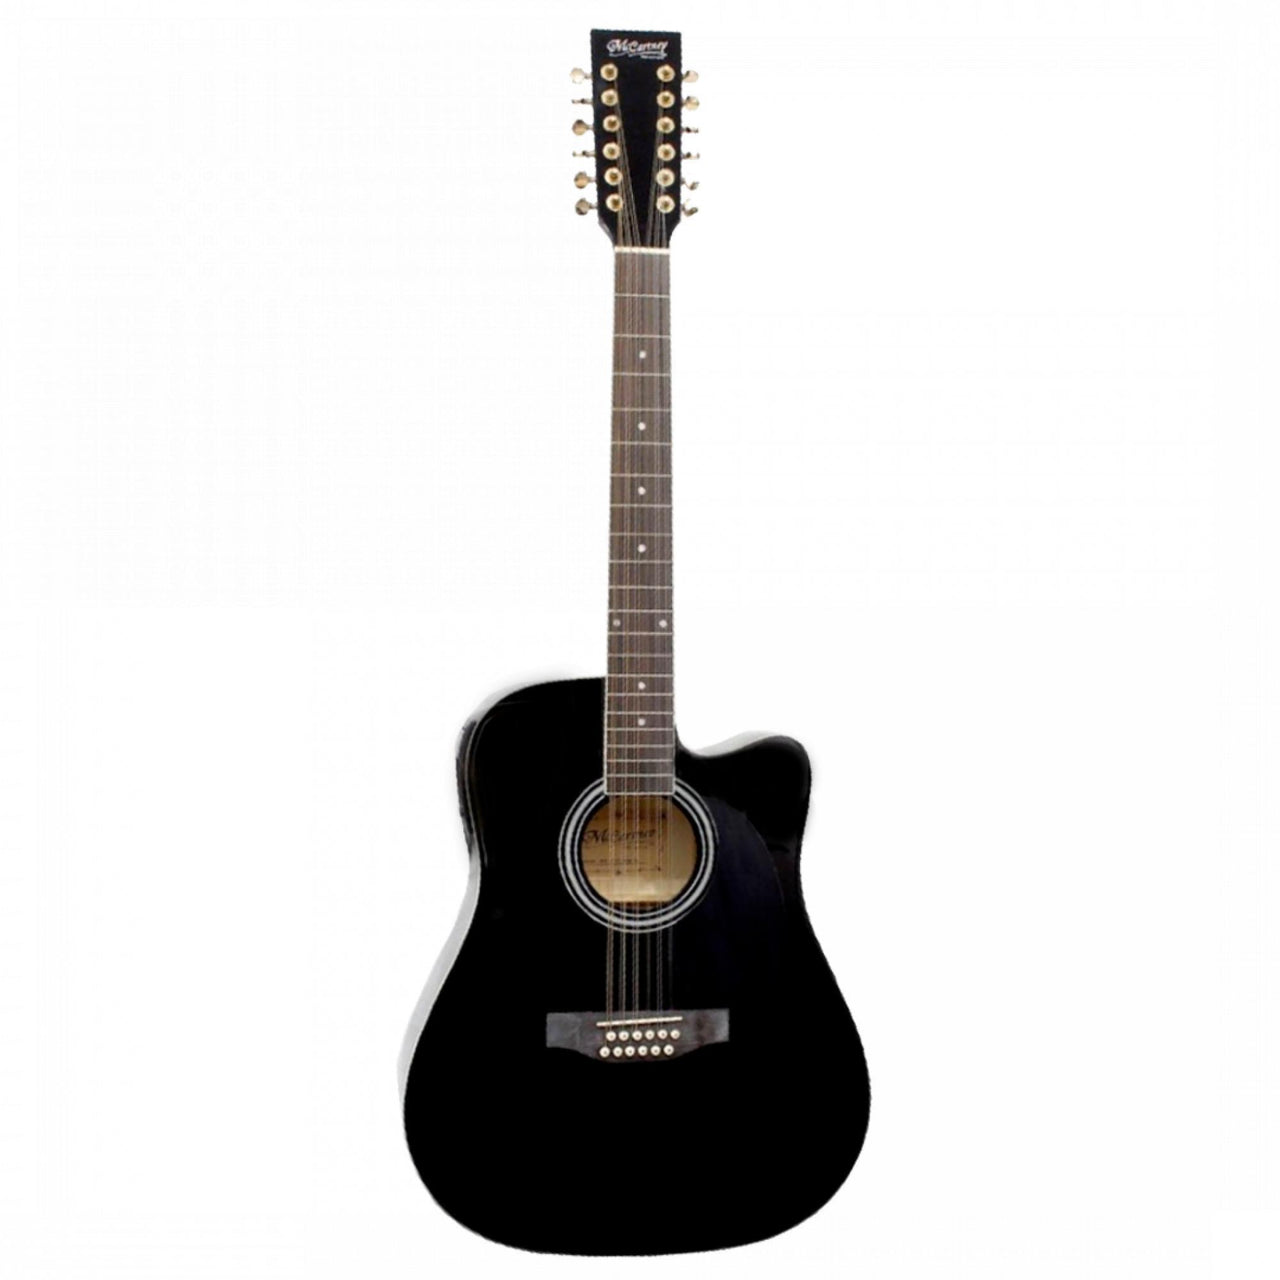 Guitarra Electroacustica Mc Cartney 12 Cdas. Negra, Bfg4117c/12eq4-bk